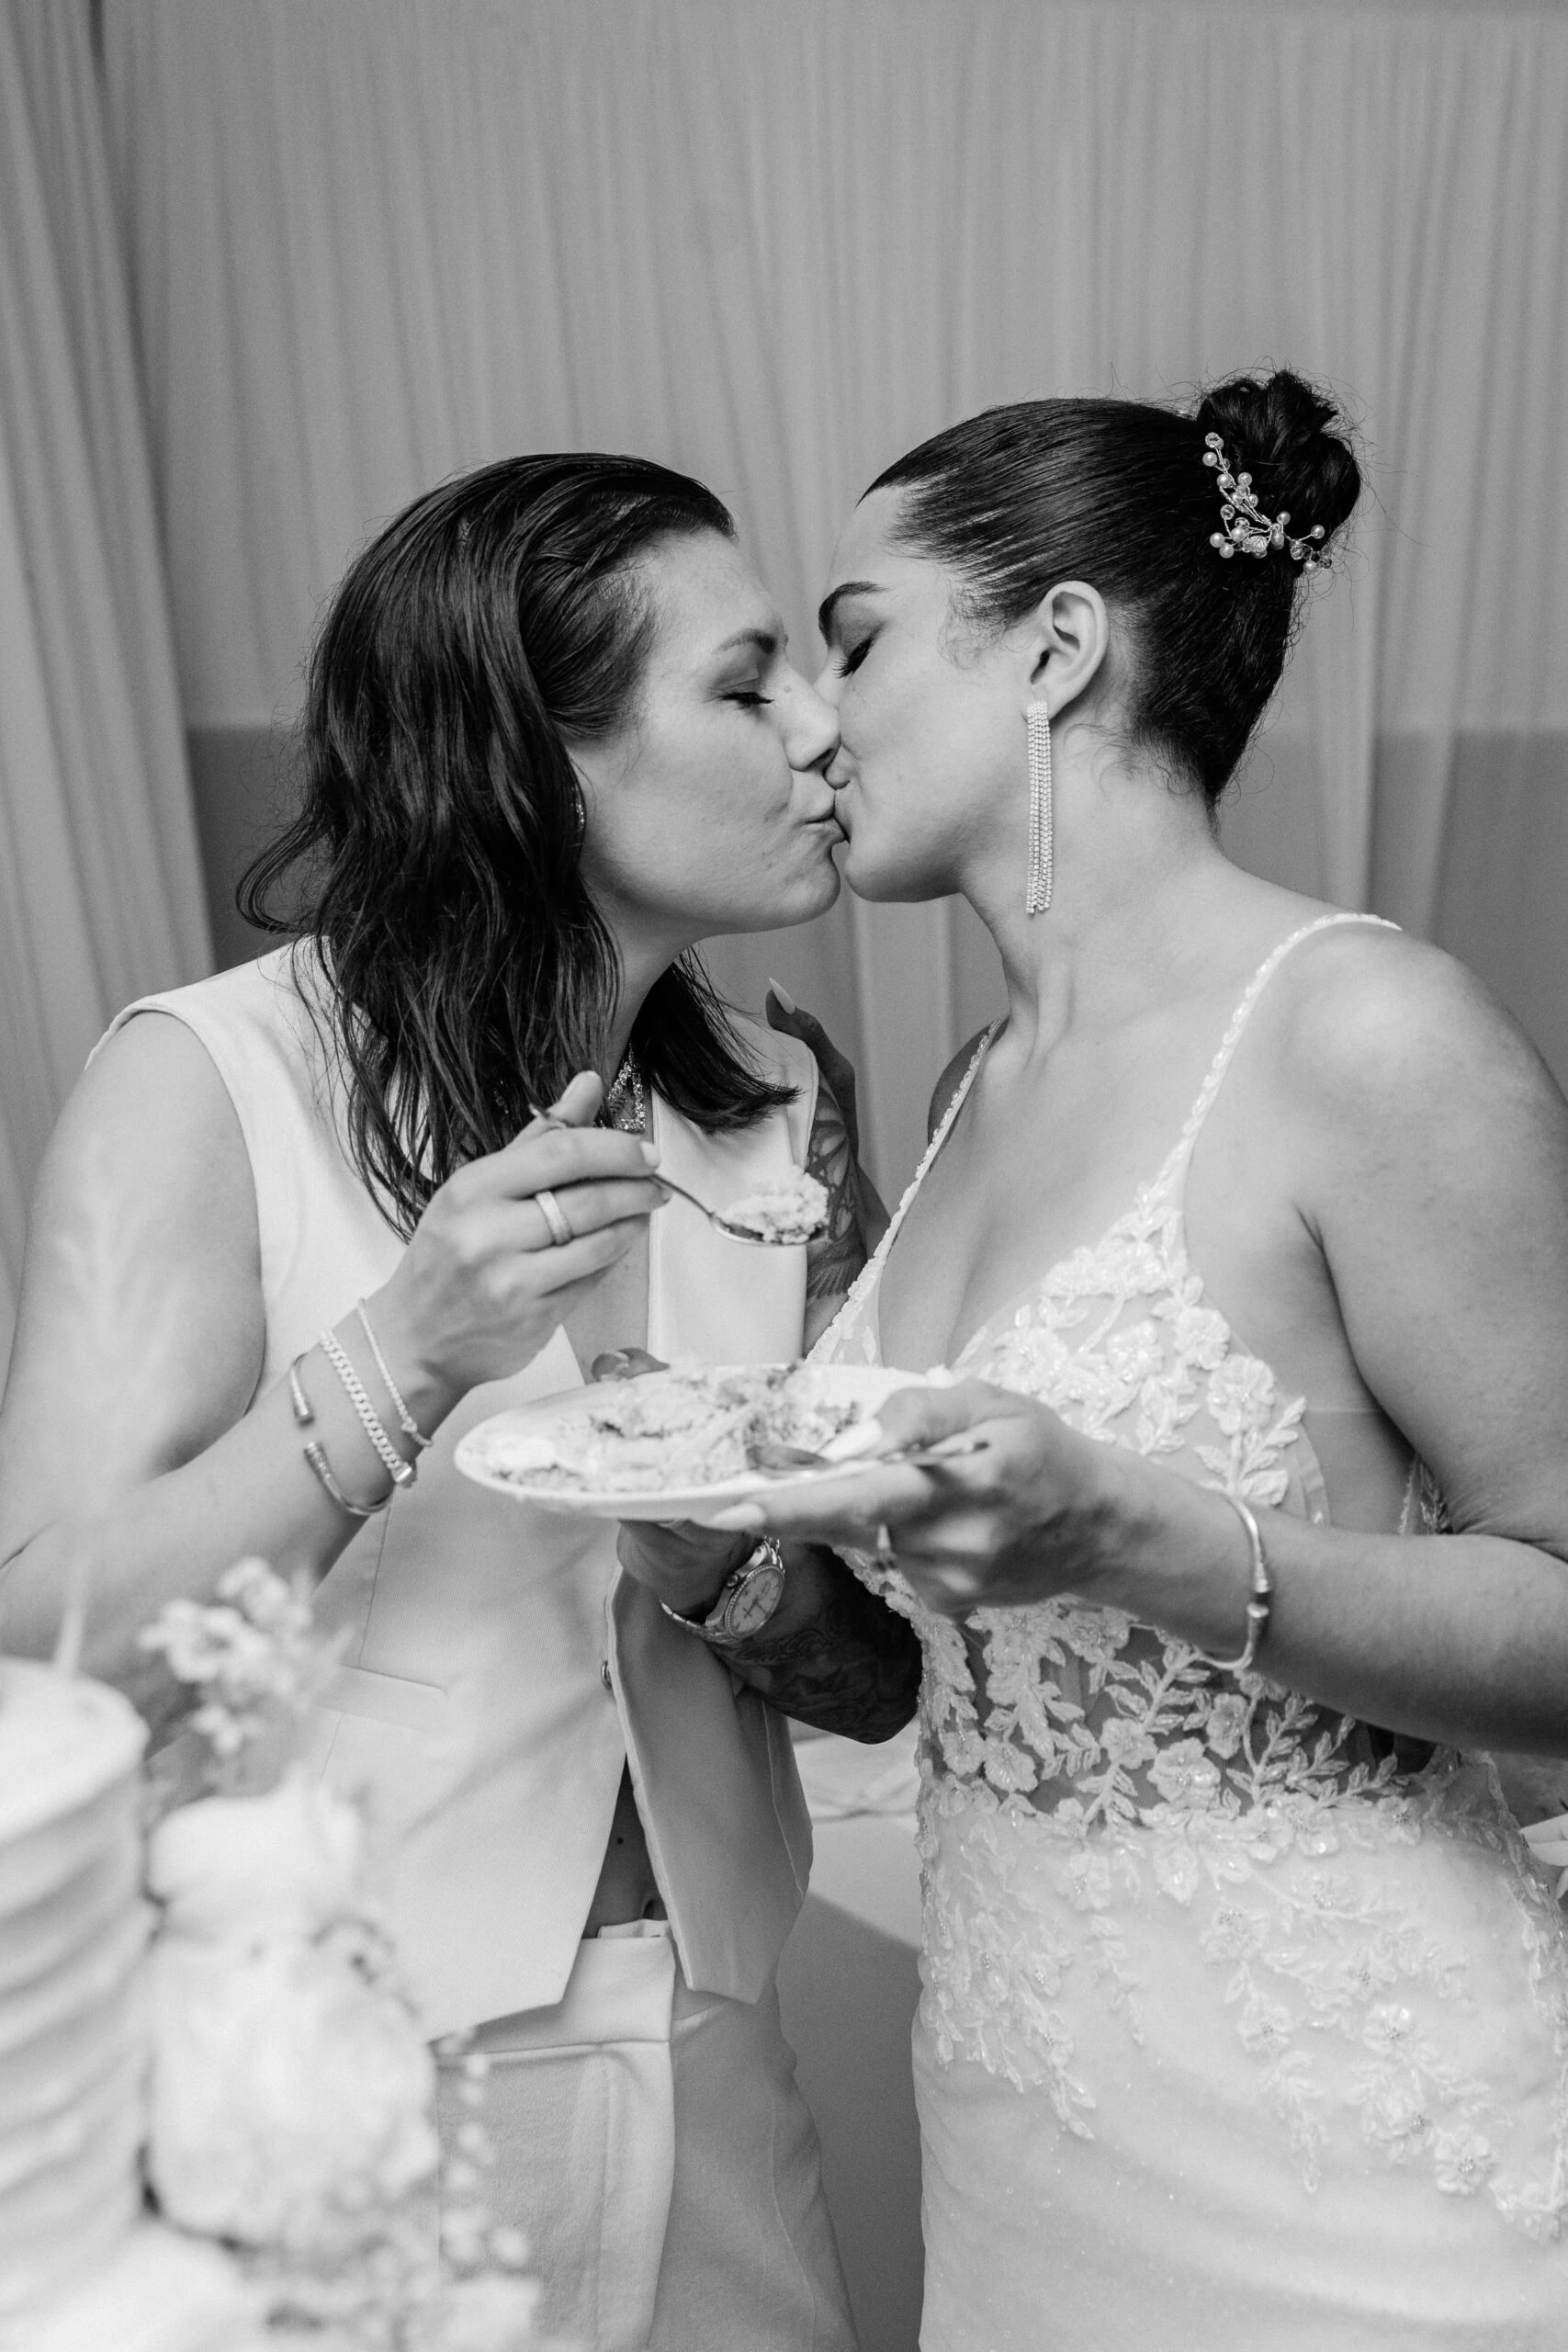 true brides ramona and charlotte kissing while eating wedding cake - Martina Liana 1137